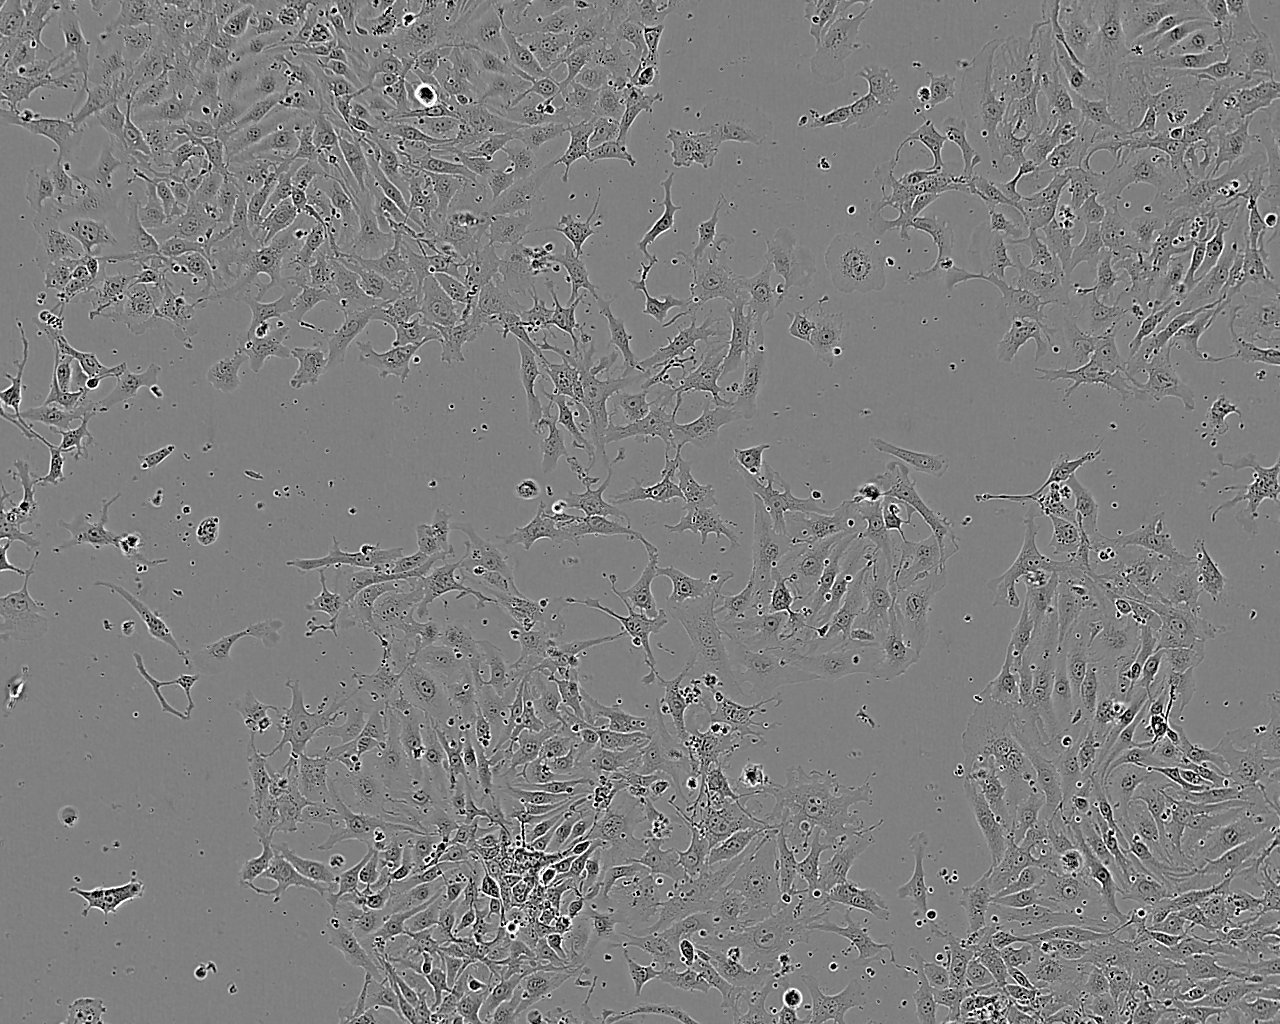 MLE-12 Cell:小鼠肺上皮细胞系,MLE-12 Cell